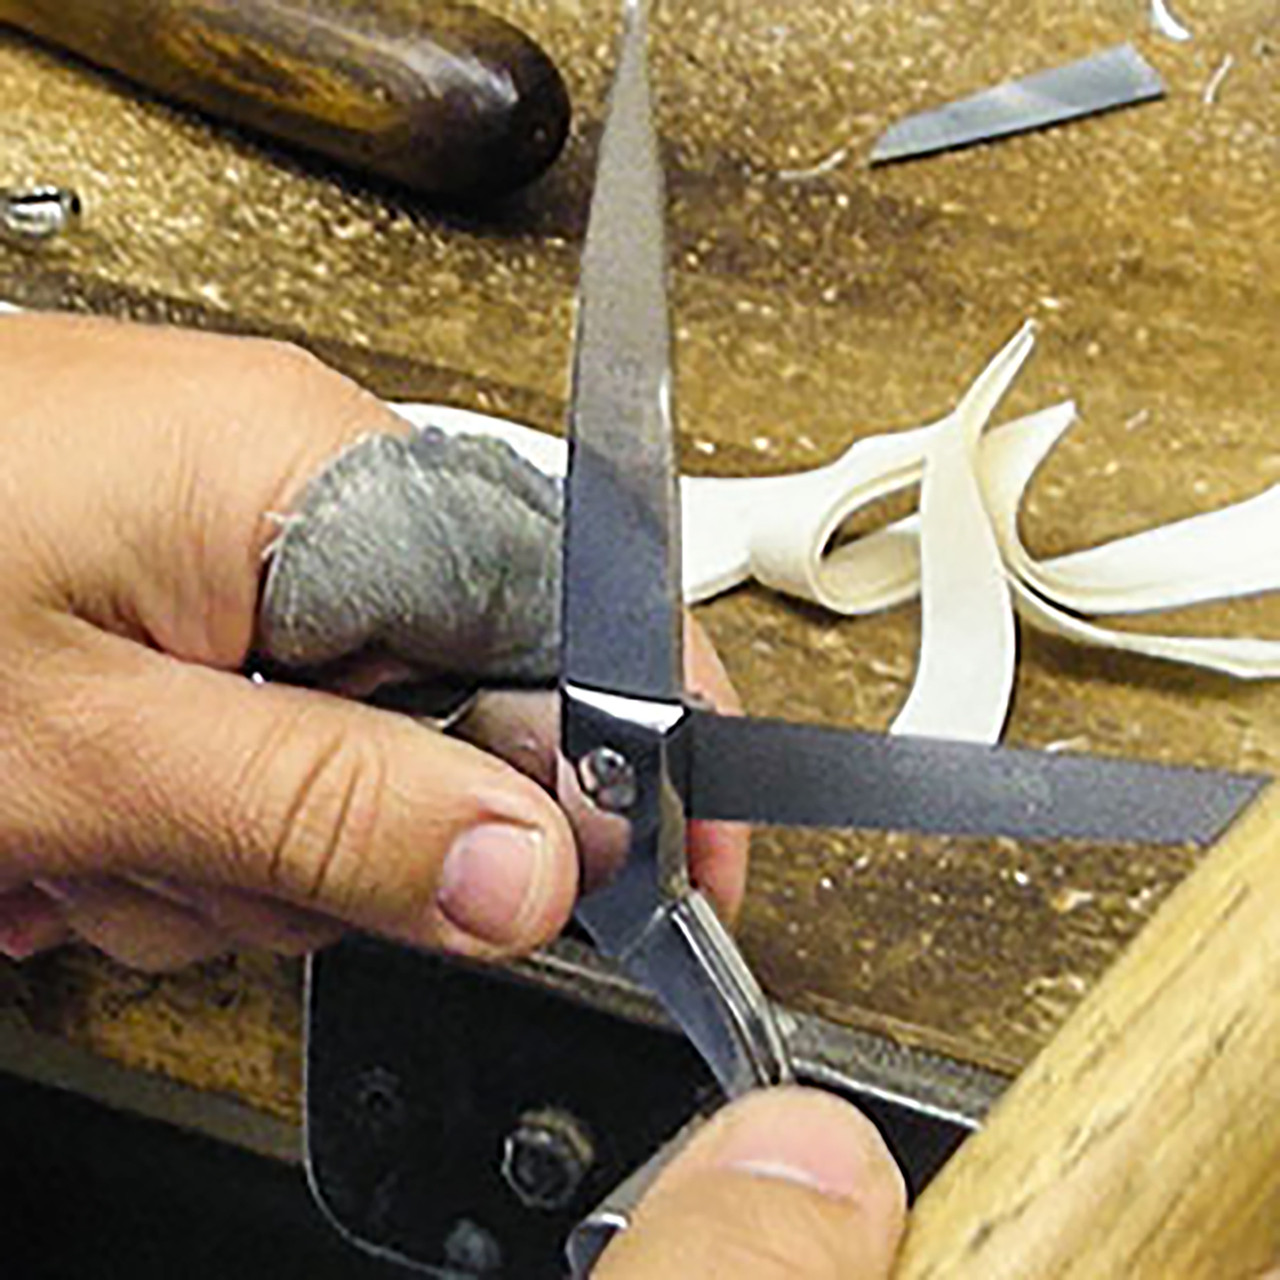 Gingher 8-Inch Knife Edge Bent Trimmer Shears (Left Handed)